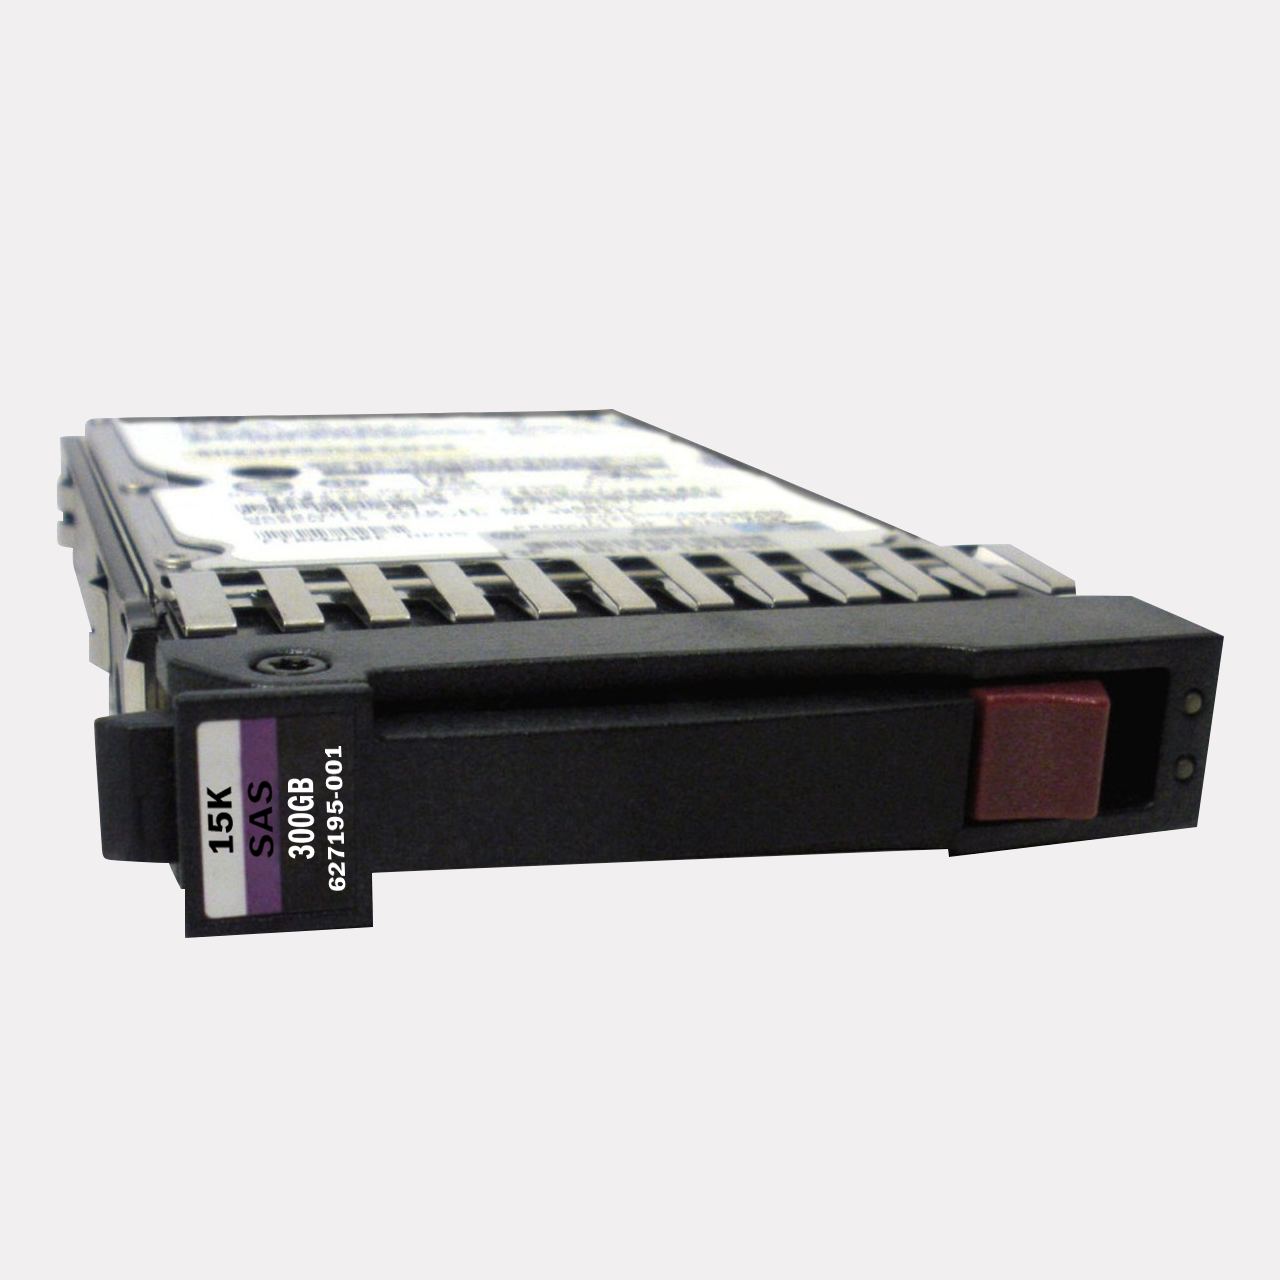 HPE 627195-001 300GB 15kRPM 2.5in SAS-6G Enterprise G4-G7 HDD